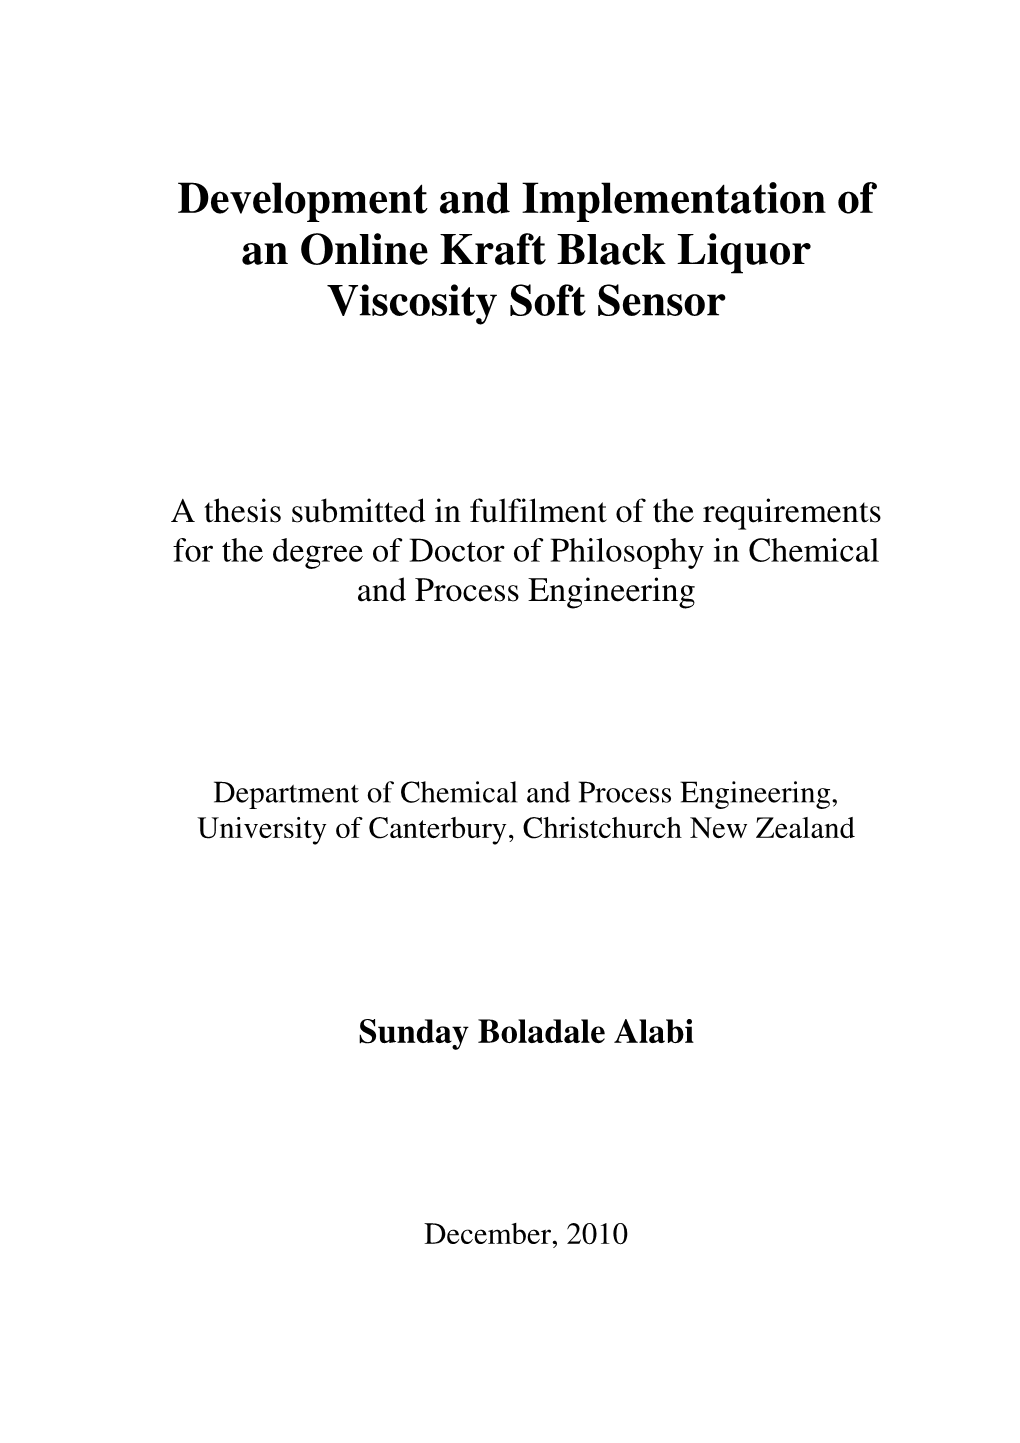 Development and Implementation of an Online Kraft Black Liquor Viscosity Soft Sensor